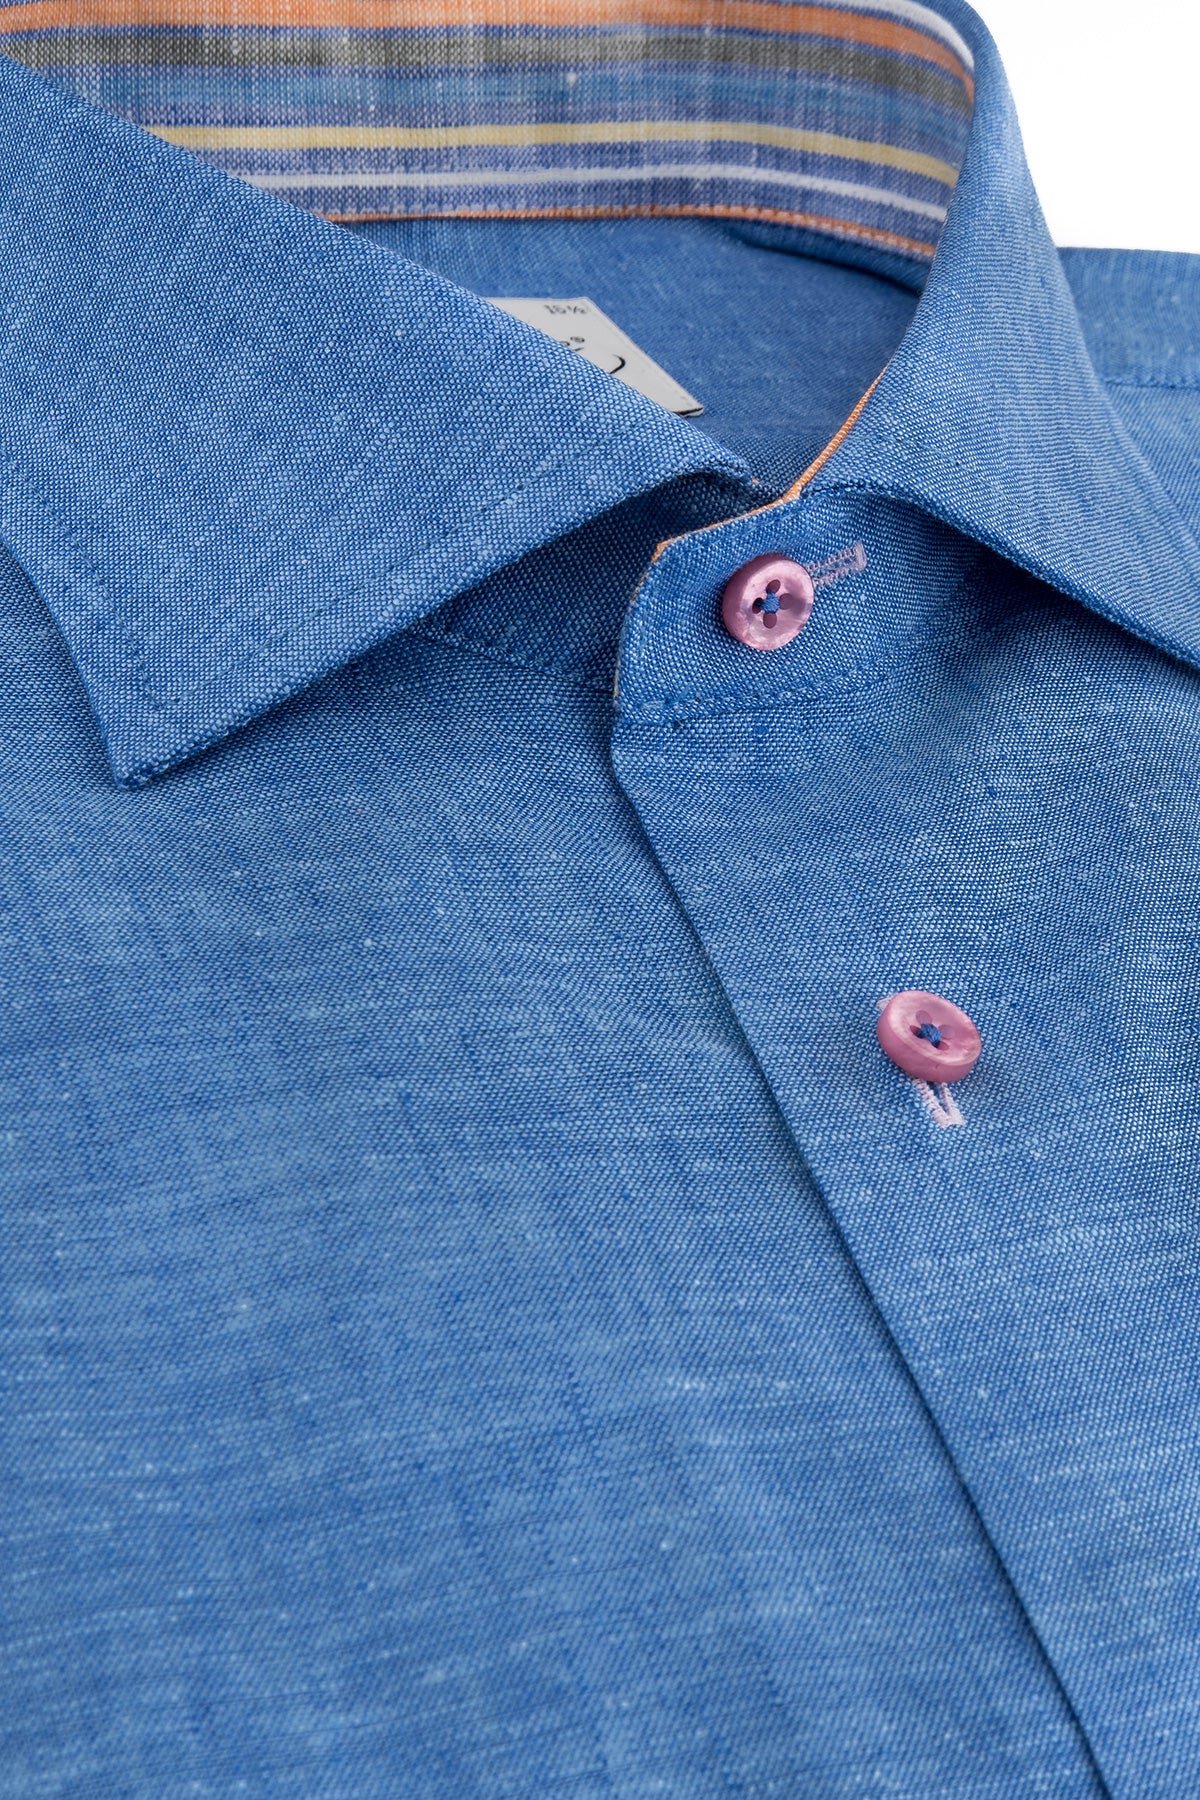 Blue regular fit shirt with contrast details